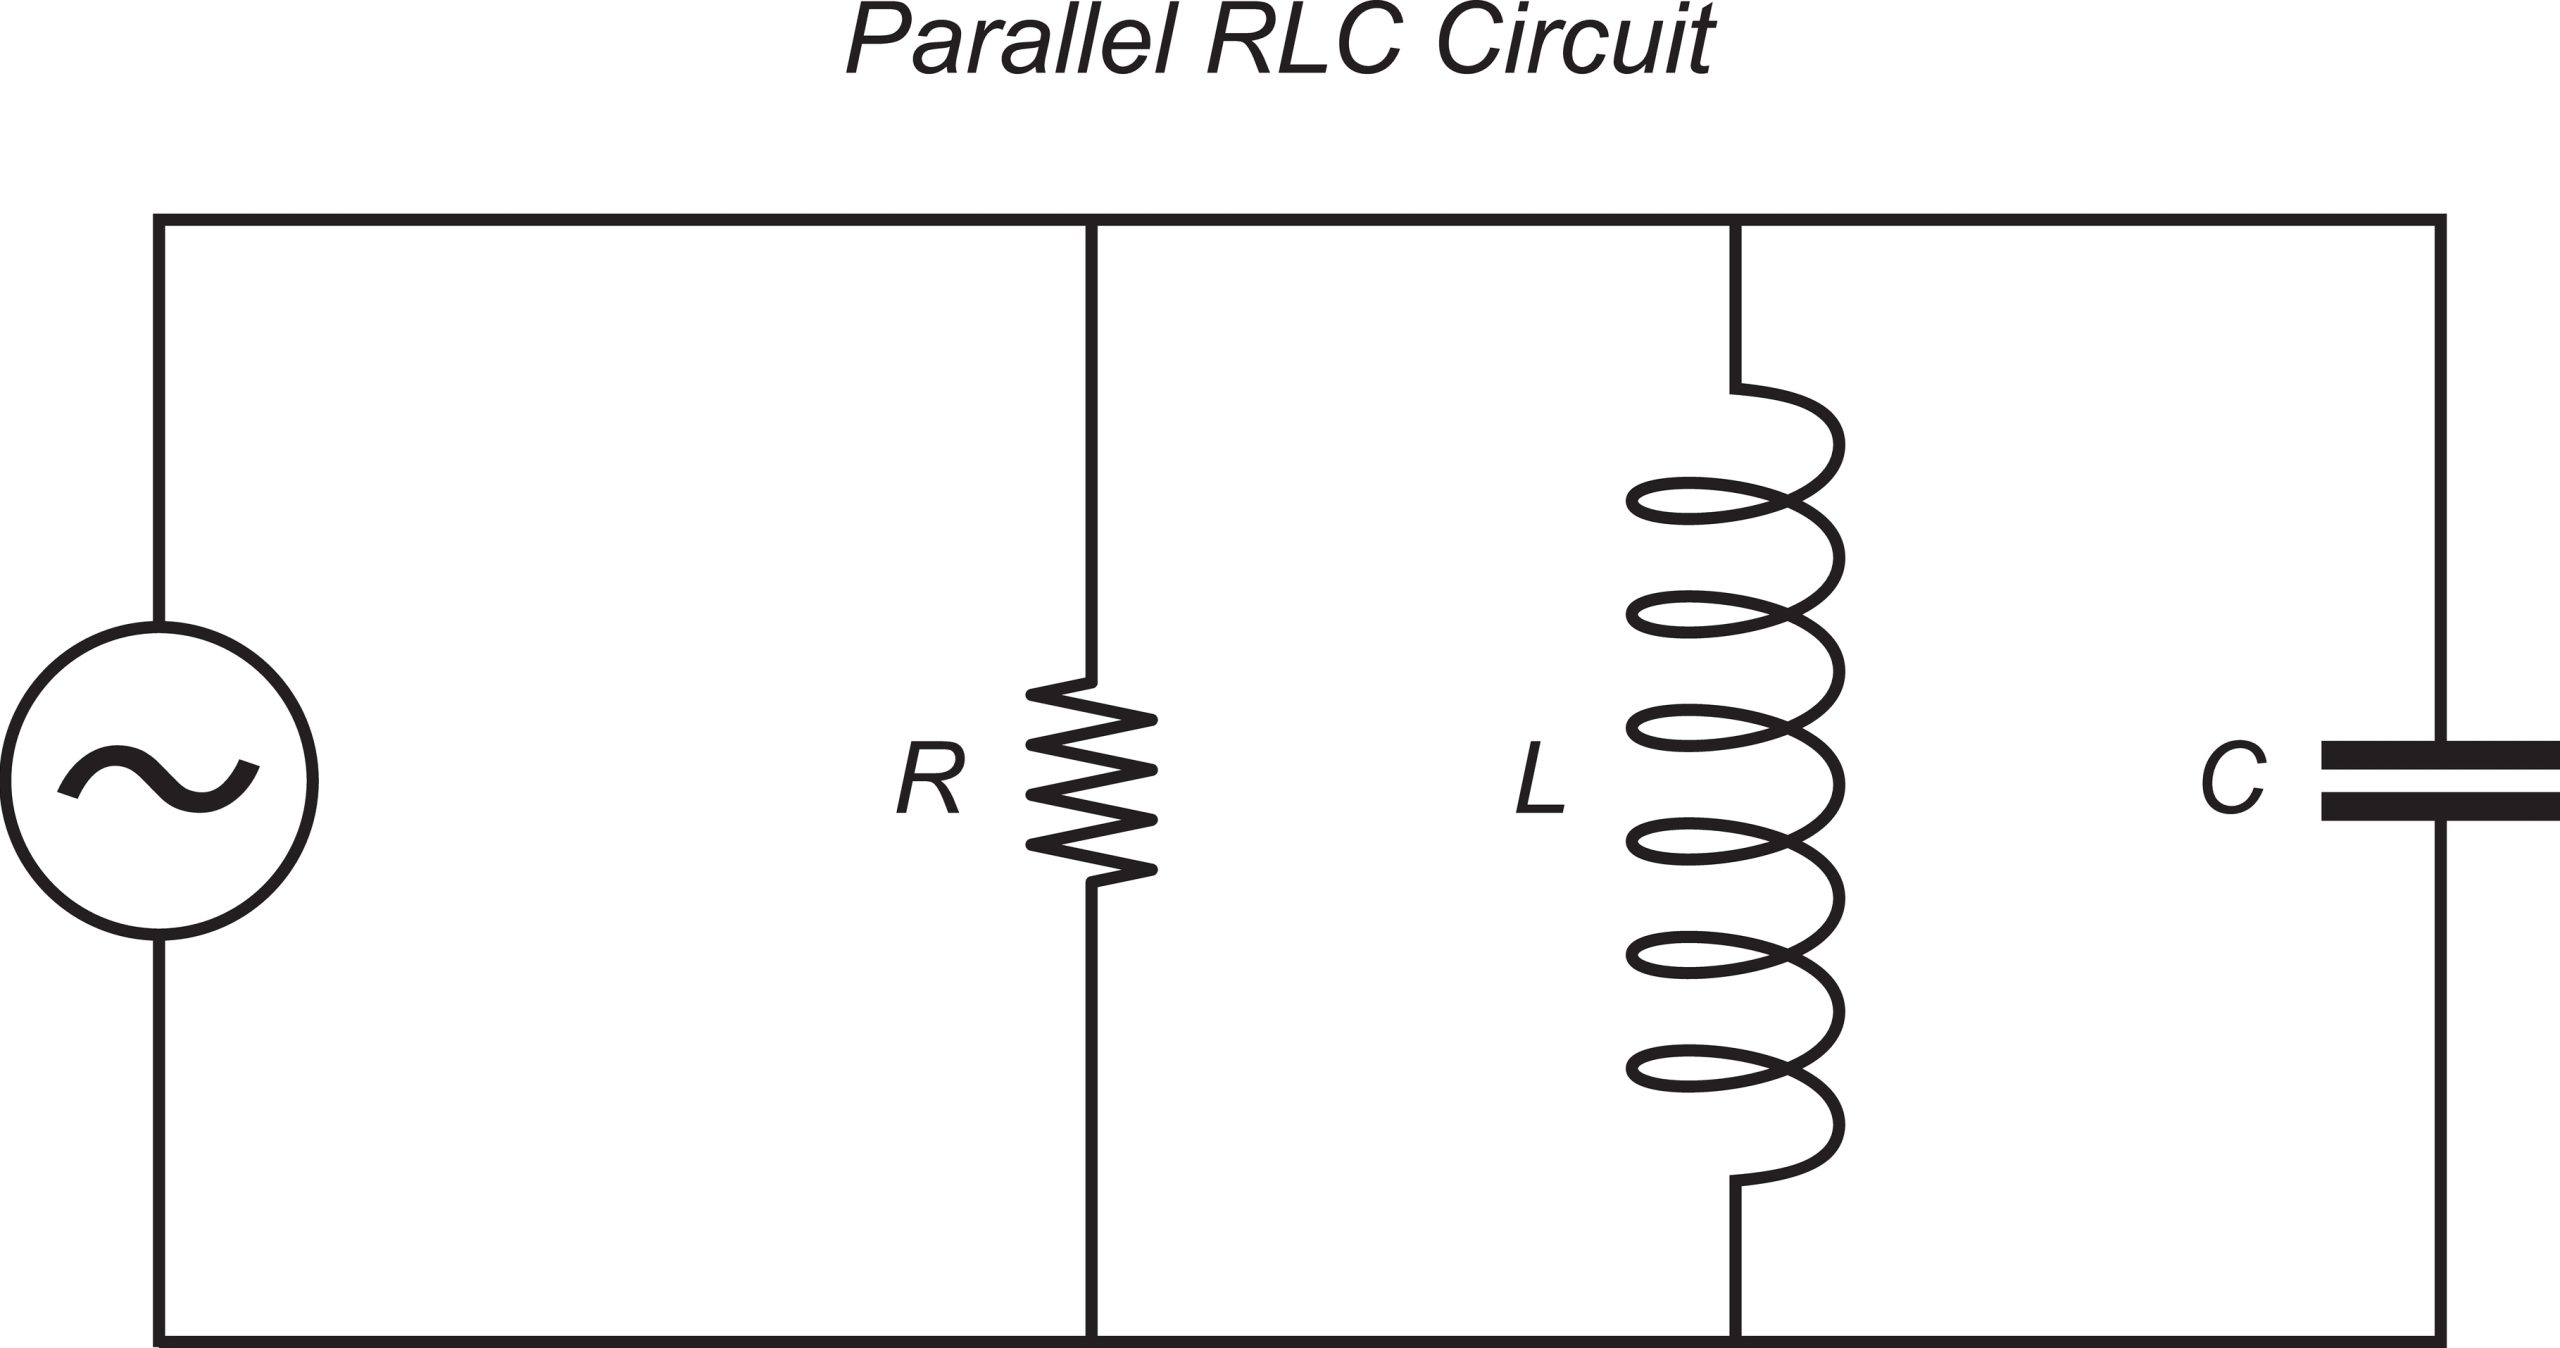 Parallel RLC circuit diagram